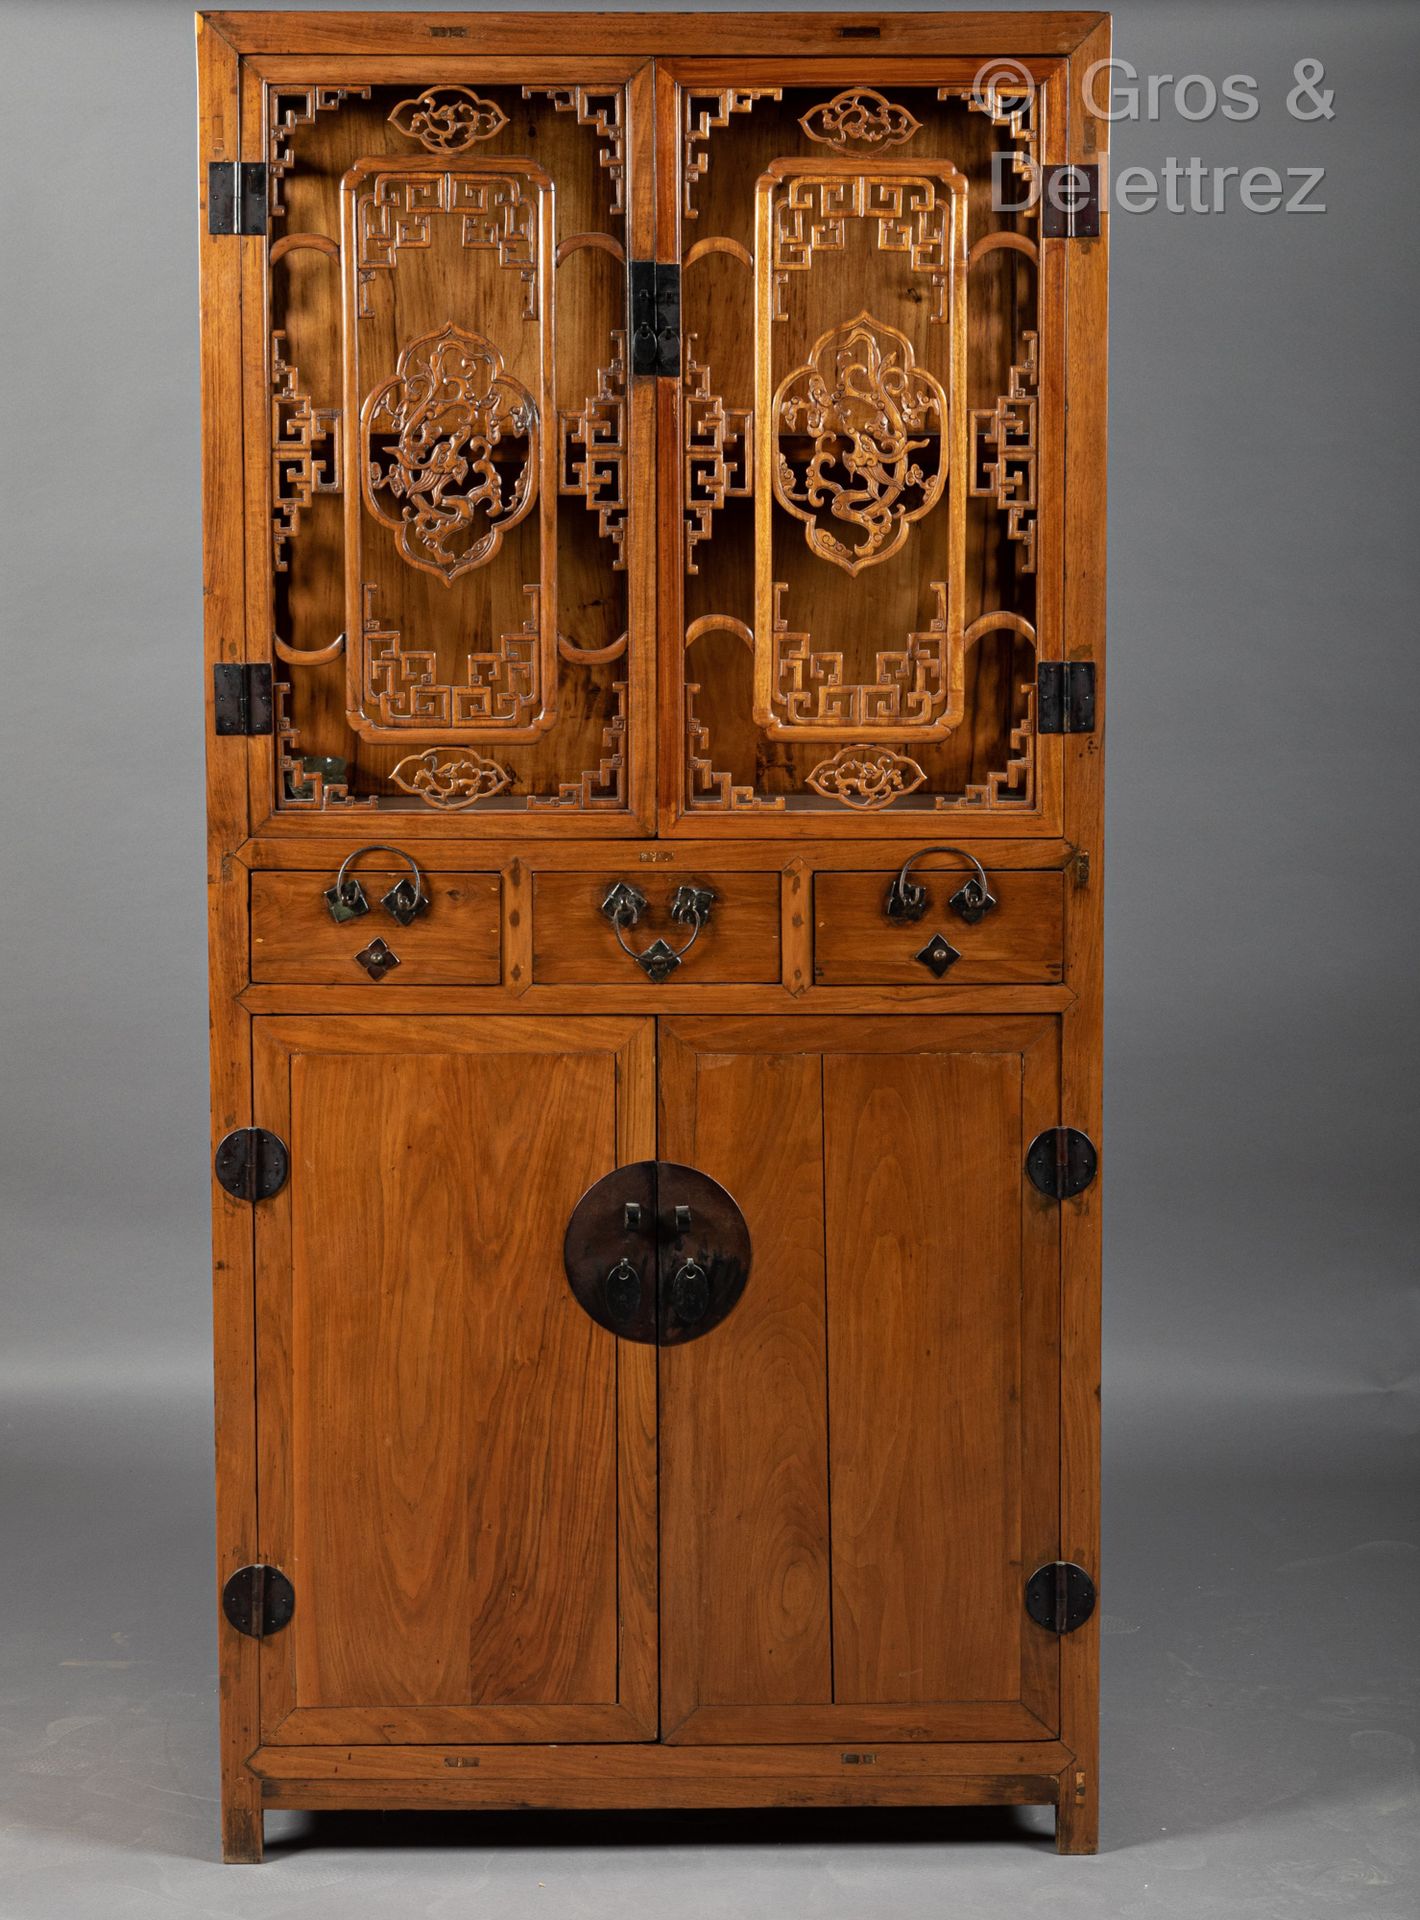 Null 榆木柜子，有淡淡的铜锈，铁制的配件，两面开门，中间有三个抽屉隔开，上面的门饰有龙和风格化的几何图案。
中国，20世纪初
尺寸189 x 91 x 49&hellip;